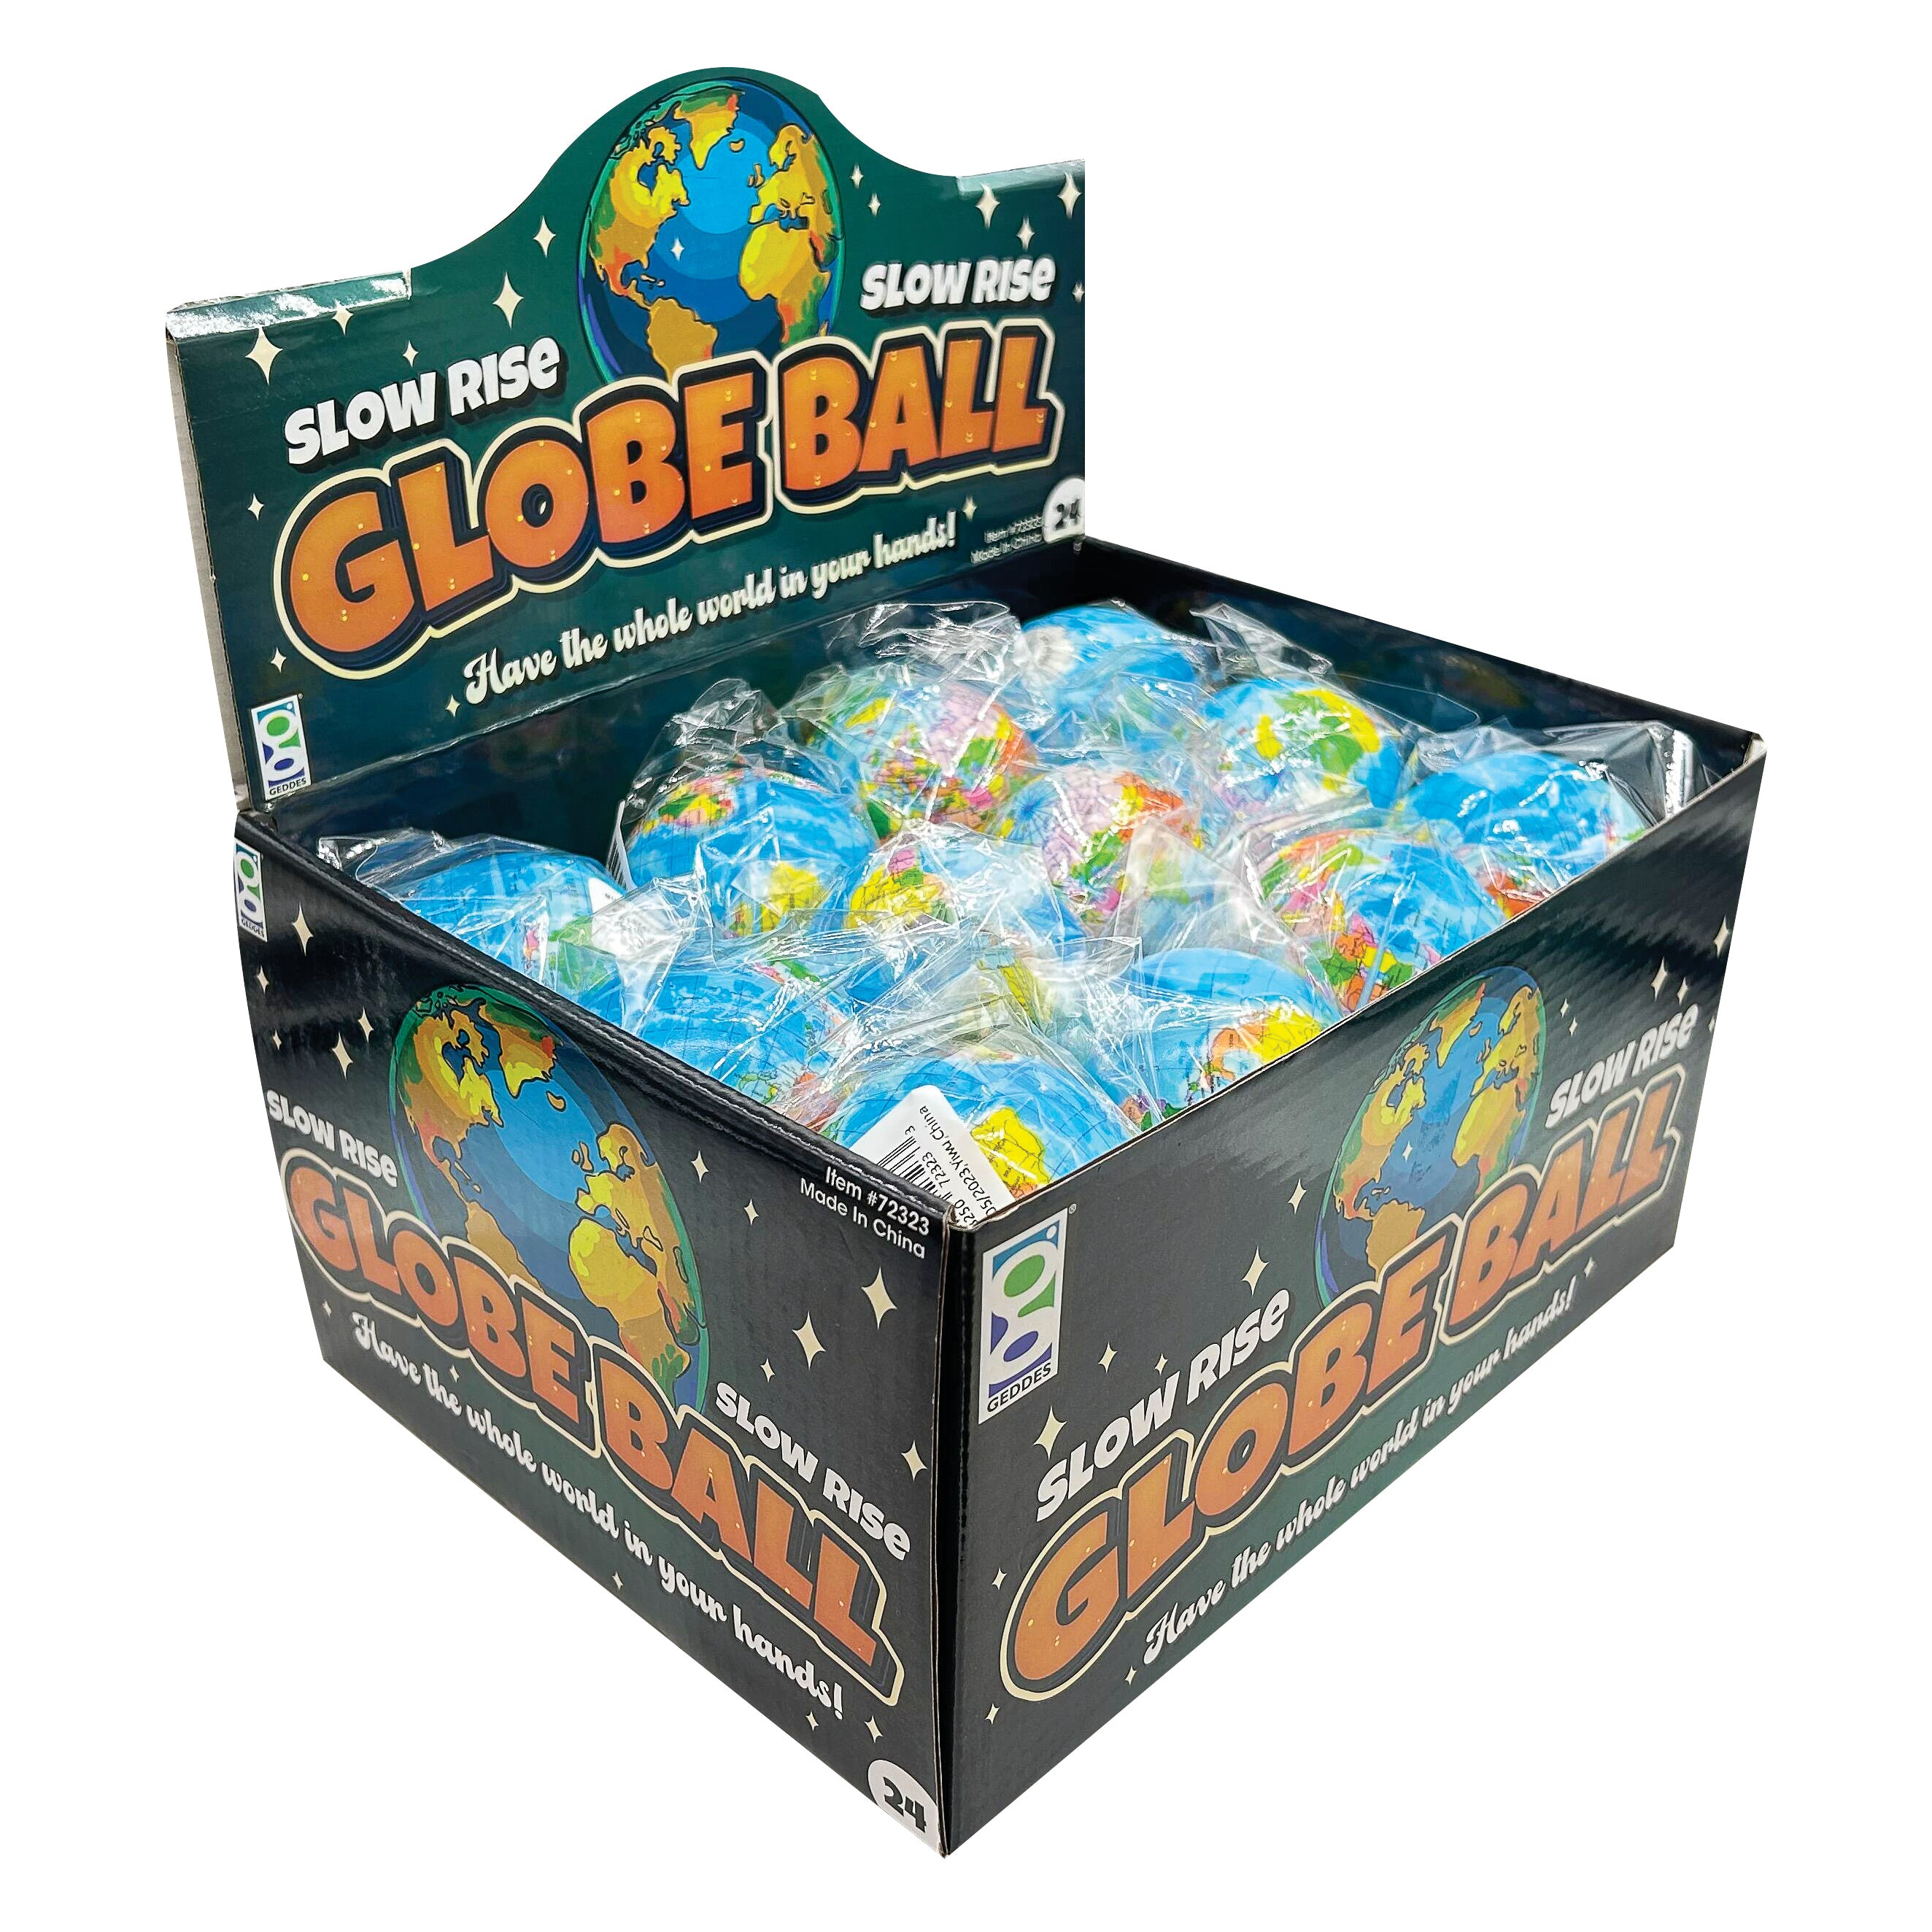 Slow Rise Globe Balls